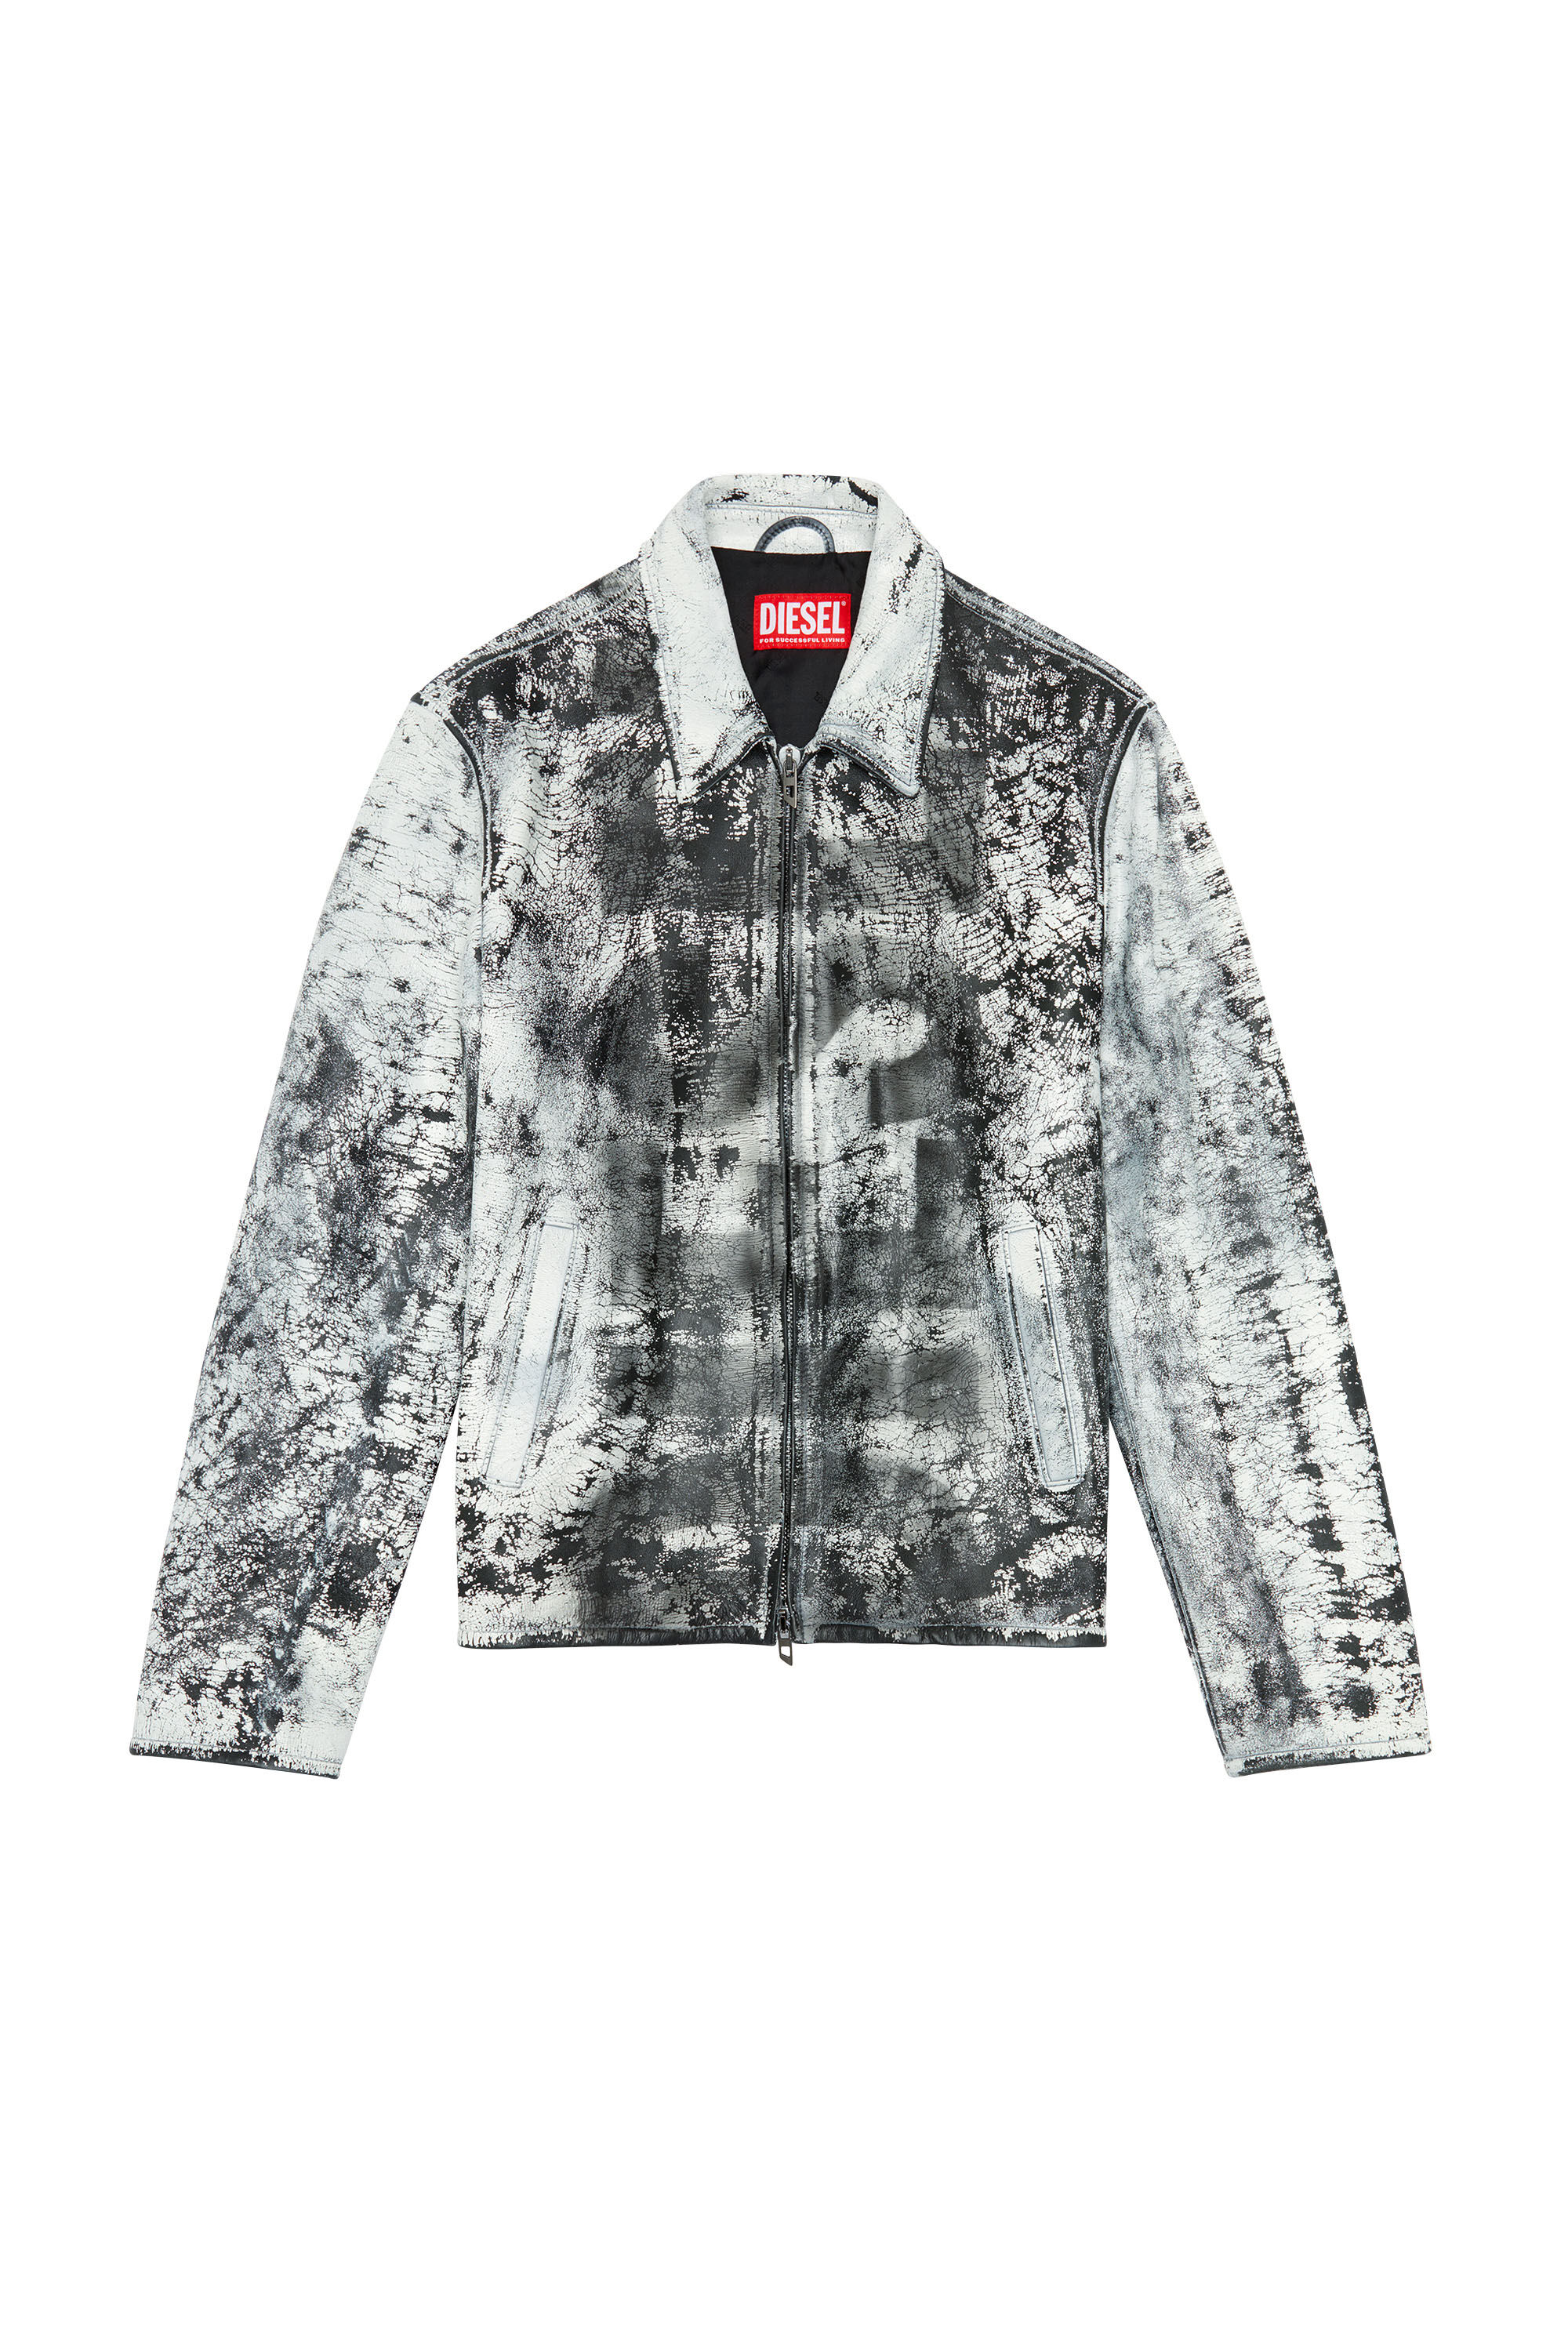 Diesel - L-PYLON-A, Man Blouson jacket in treated leather in Multicolor - Image 2